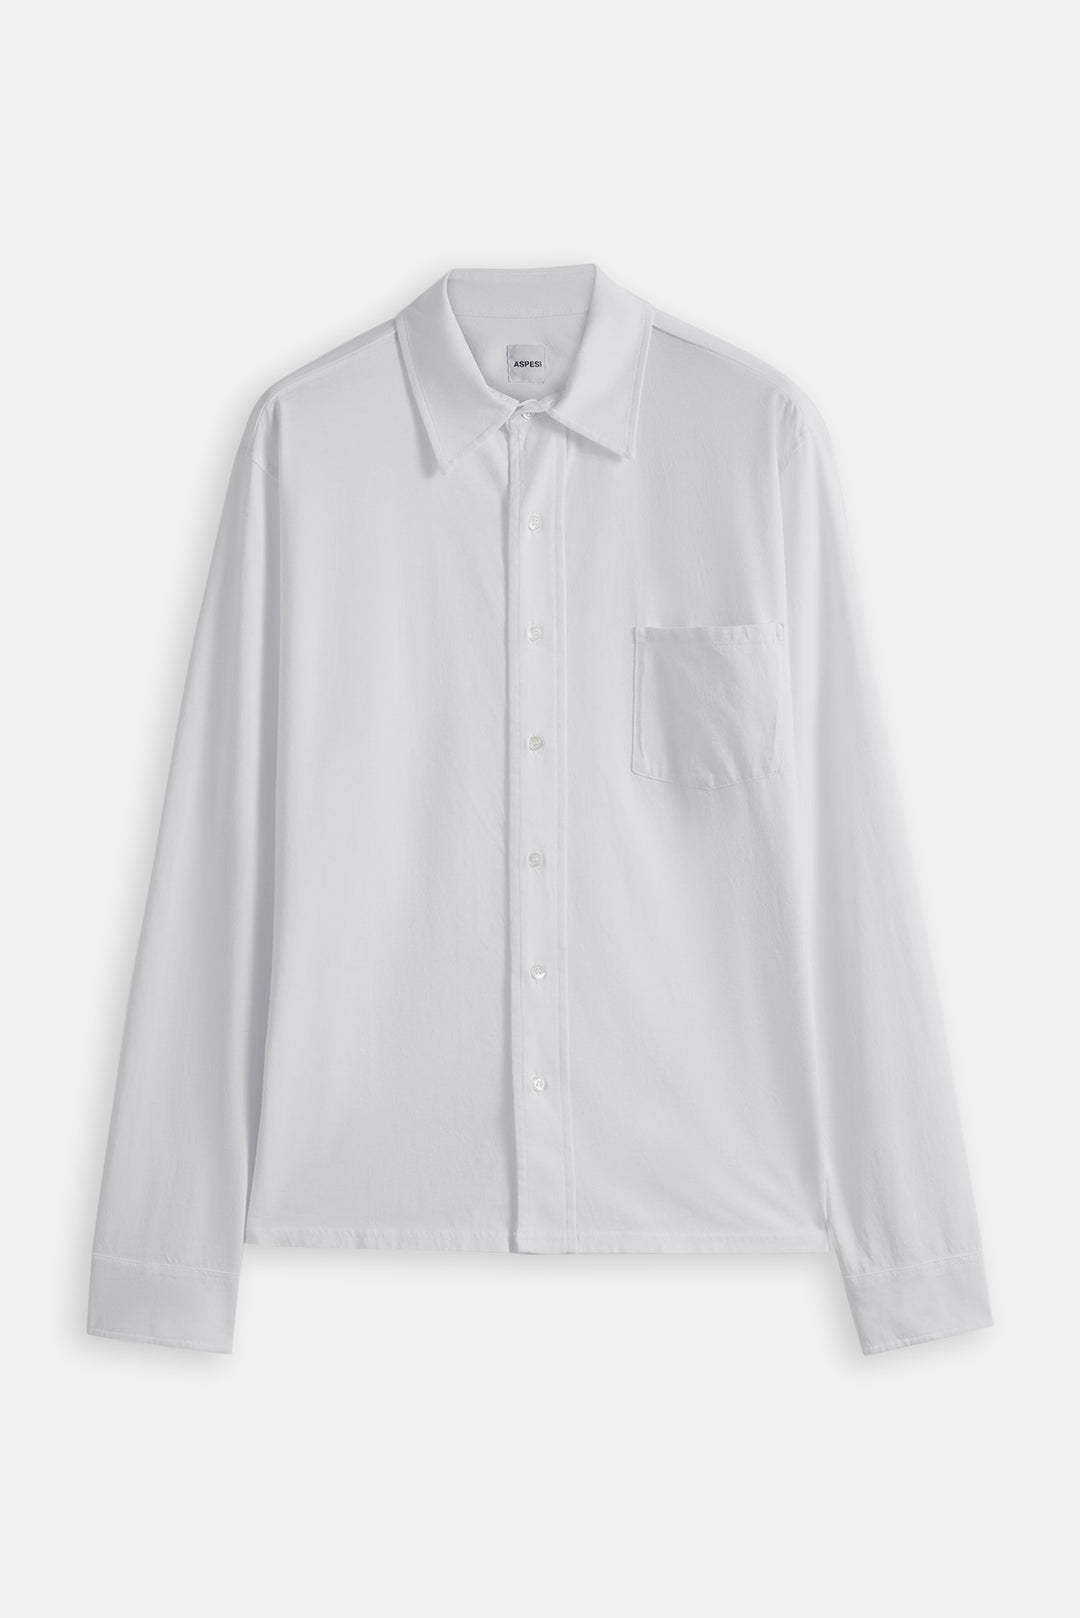 Cotton Jersey Shirt White